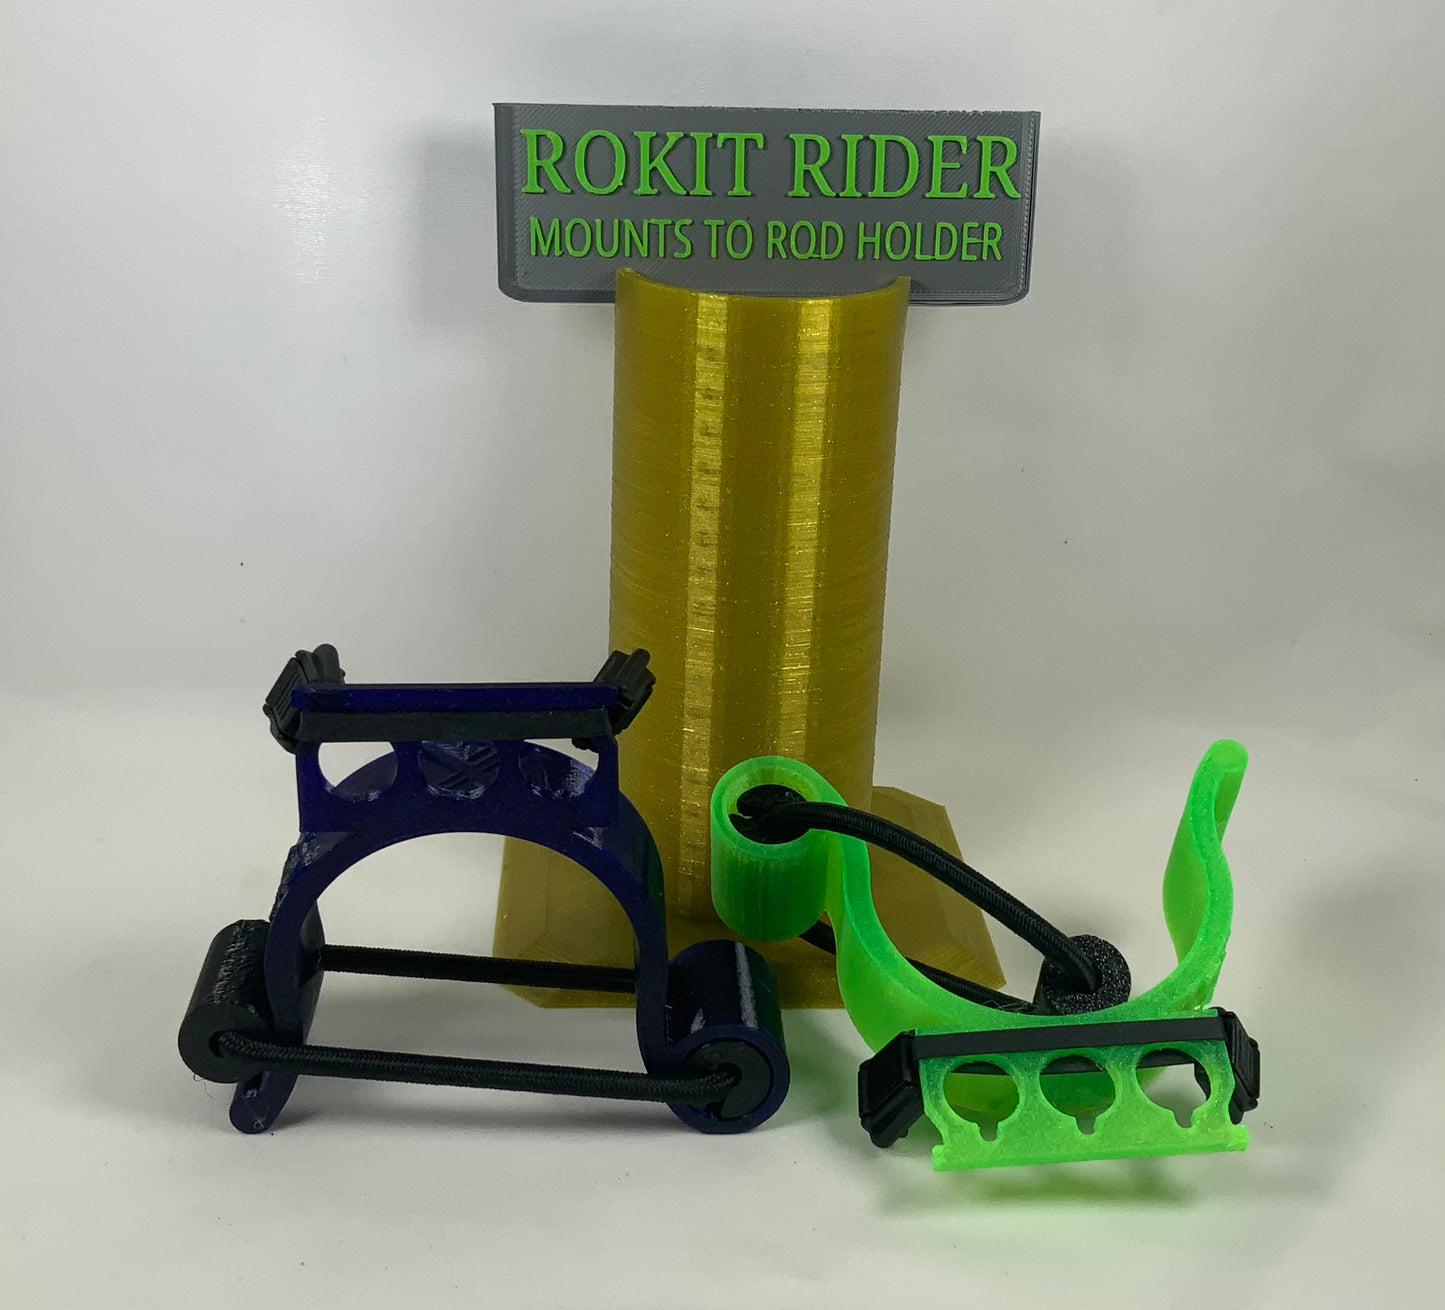 RoKit Rider TacLRac X4 - Tackle holder